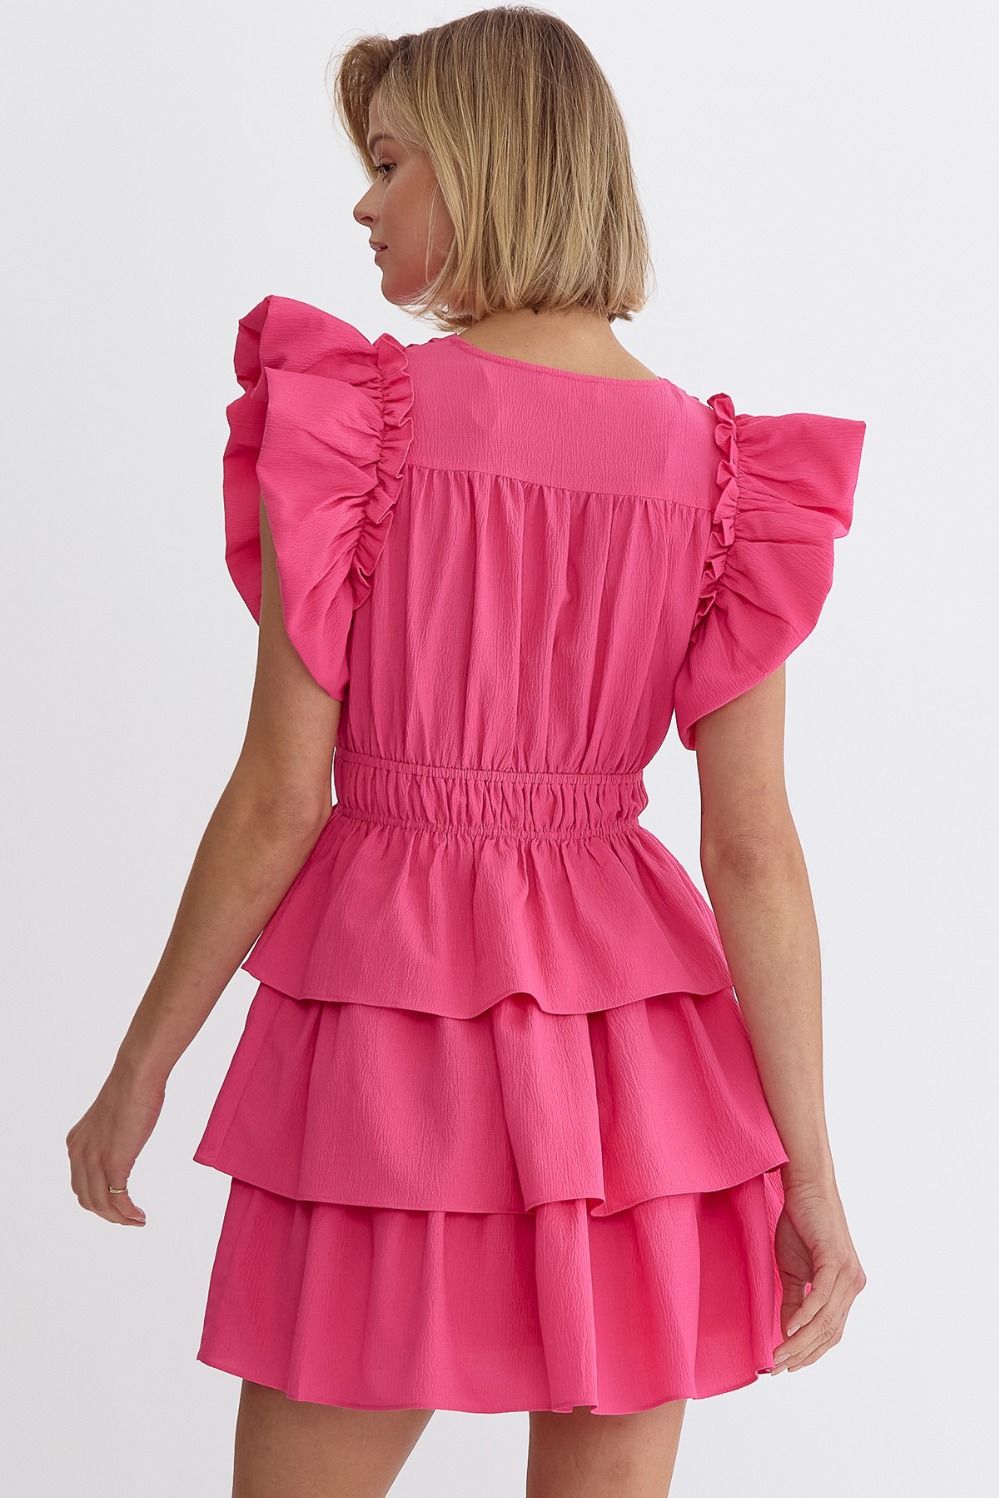 "Camellia" Pink Ruffled Dress